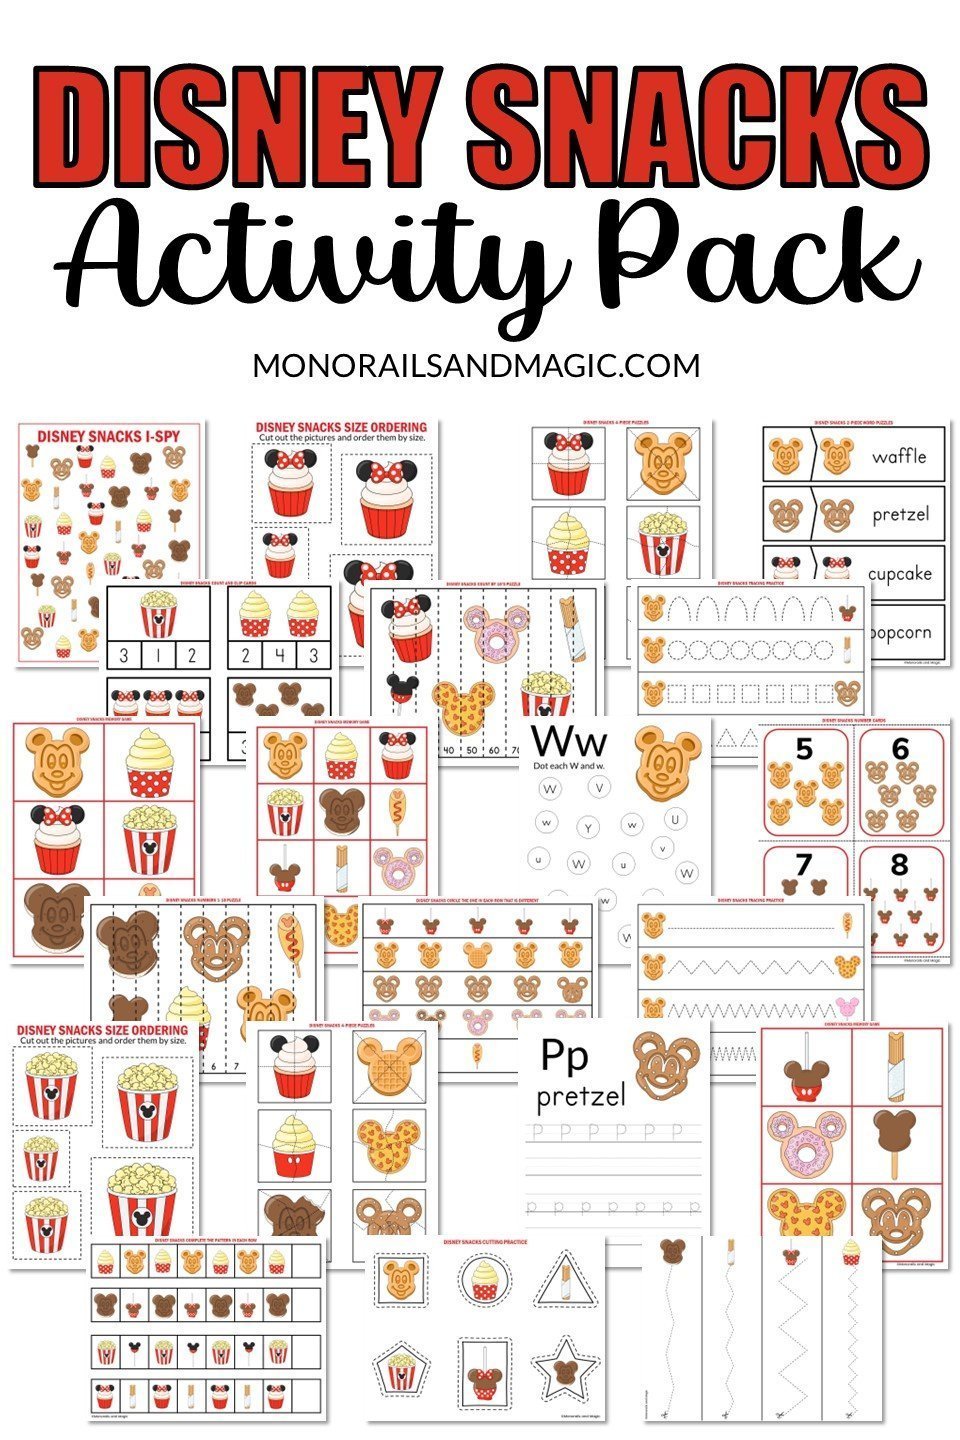 Printable Disney snacks activity pack for kids.